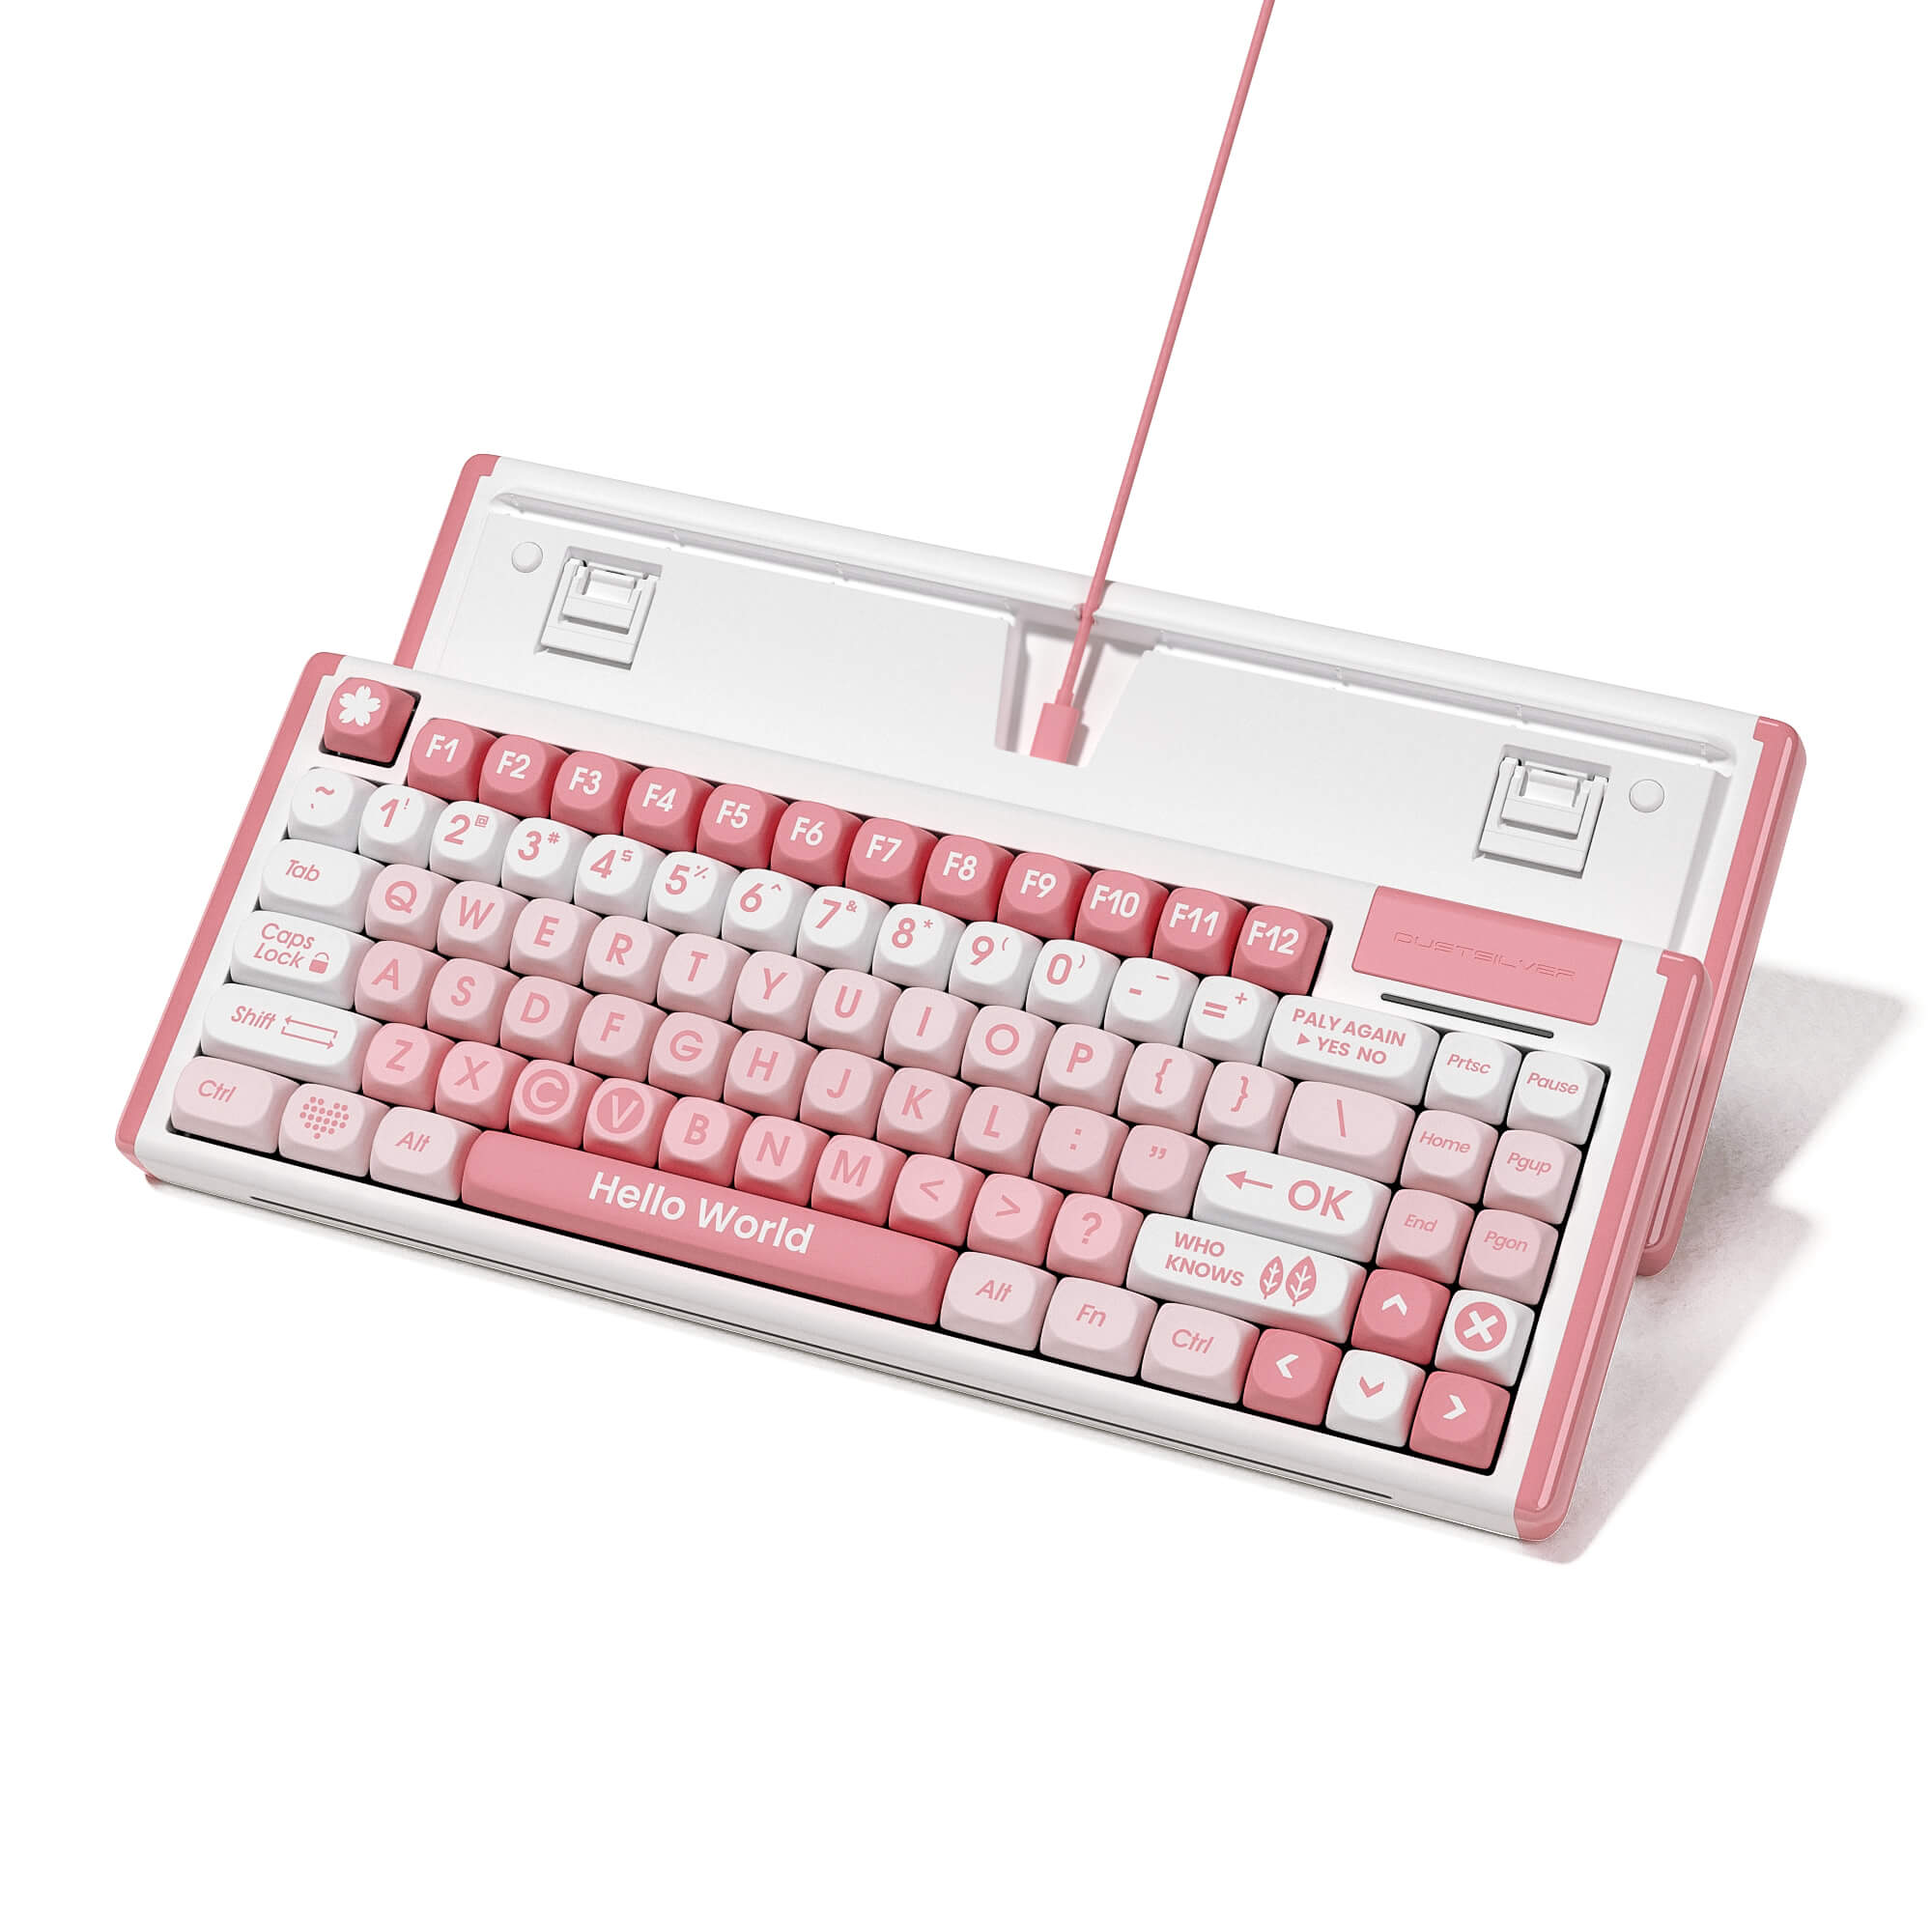 Dustsilver Peach Blossoms K84 Wired 75% layout Welded Switch Mechanical Keyboard